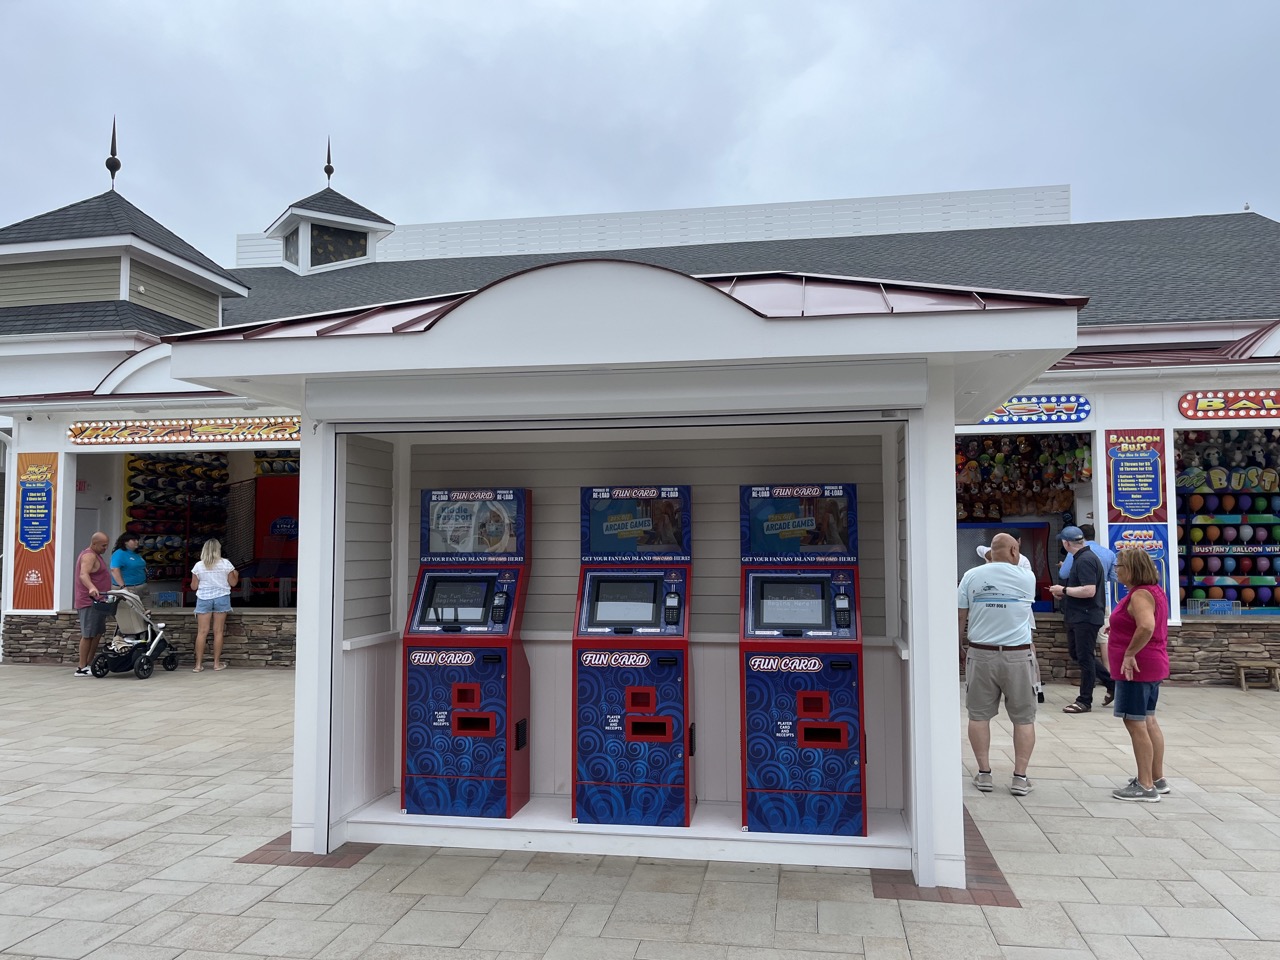 Fantasy Island Amusement Park Boardwalk Games and fun card stations